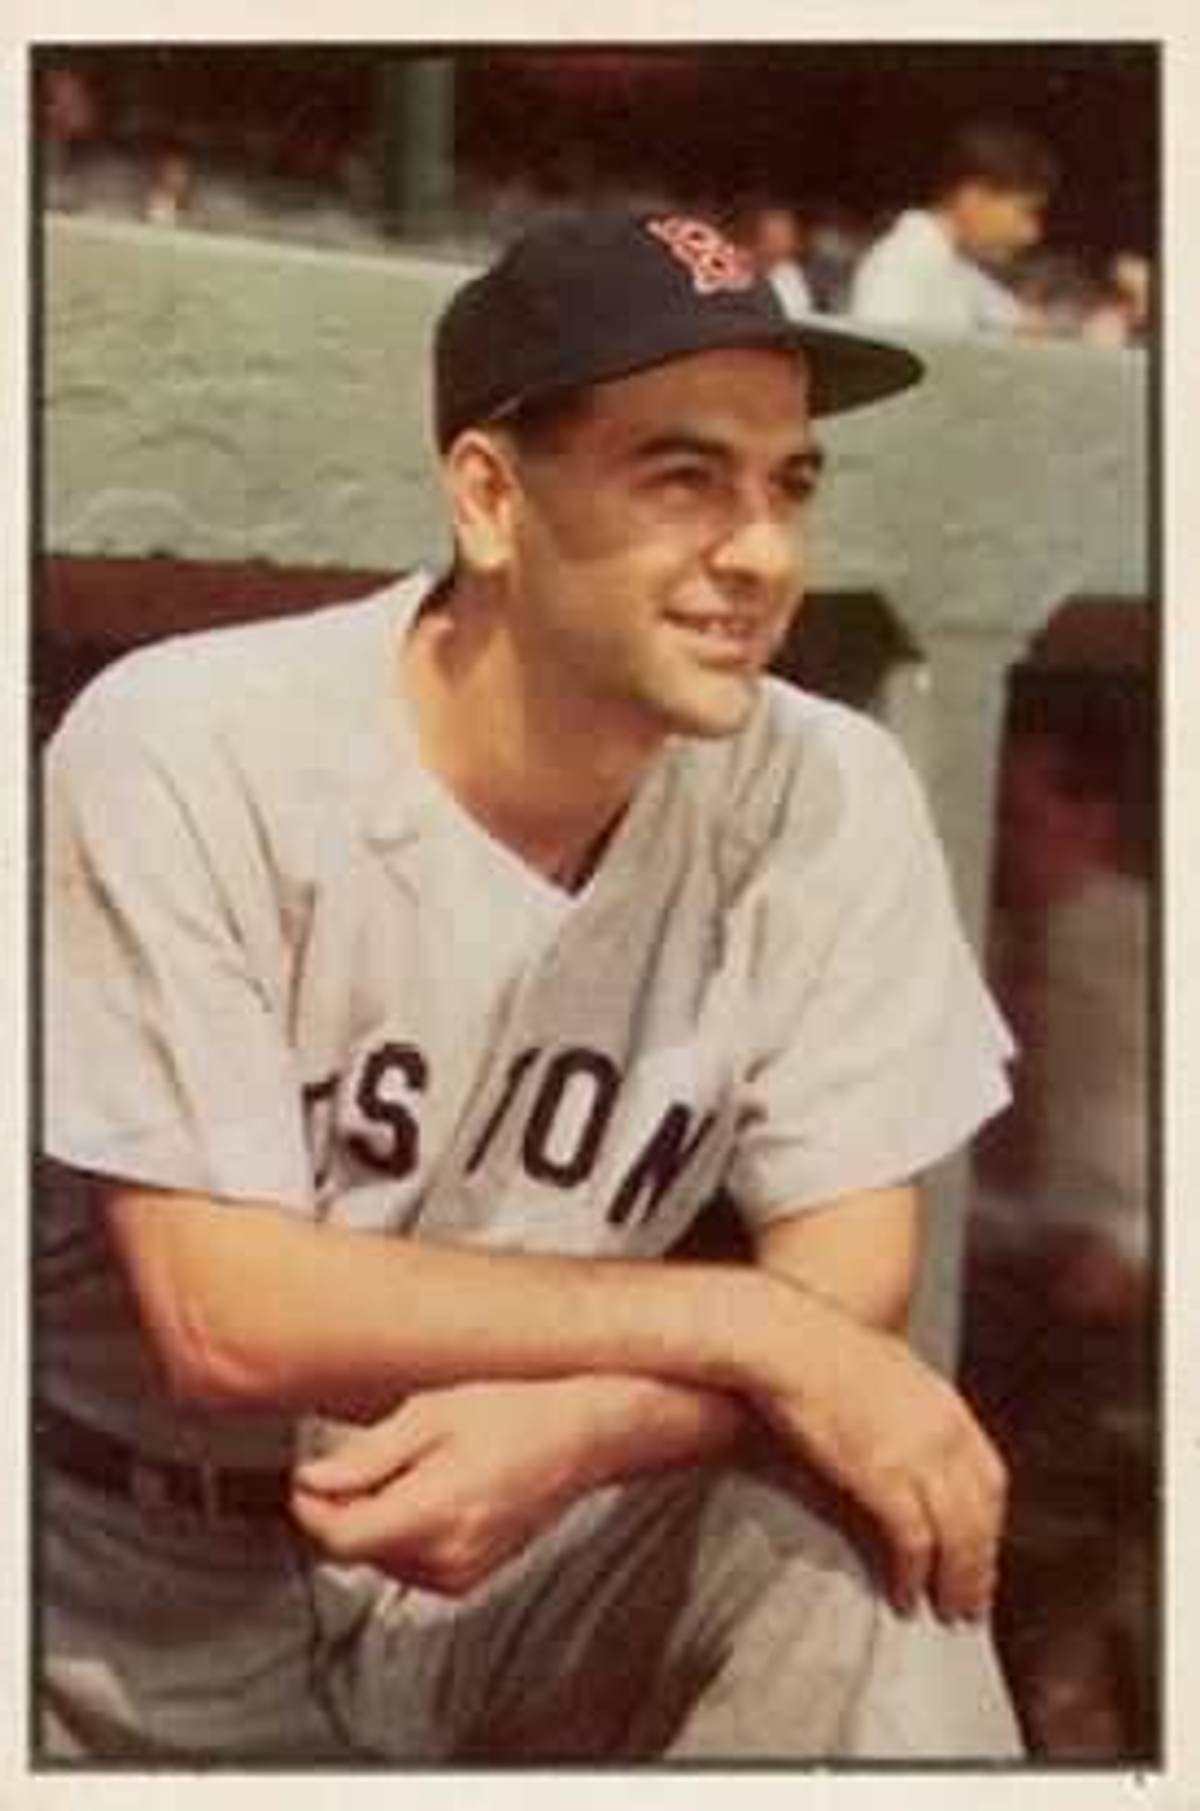 1953 Bowman Color baseball card of Lou Boudreau of the Boston Red Sox #57. (Wikimedia)